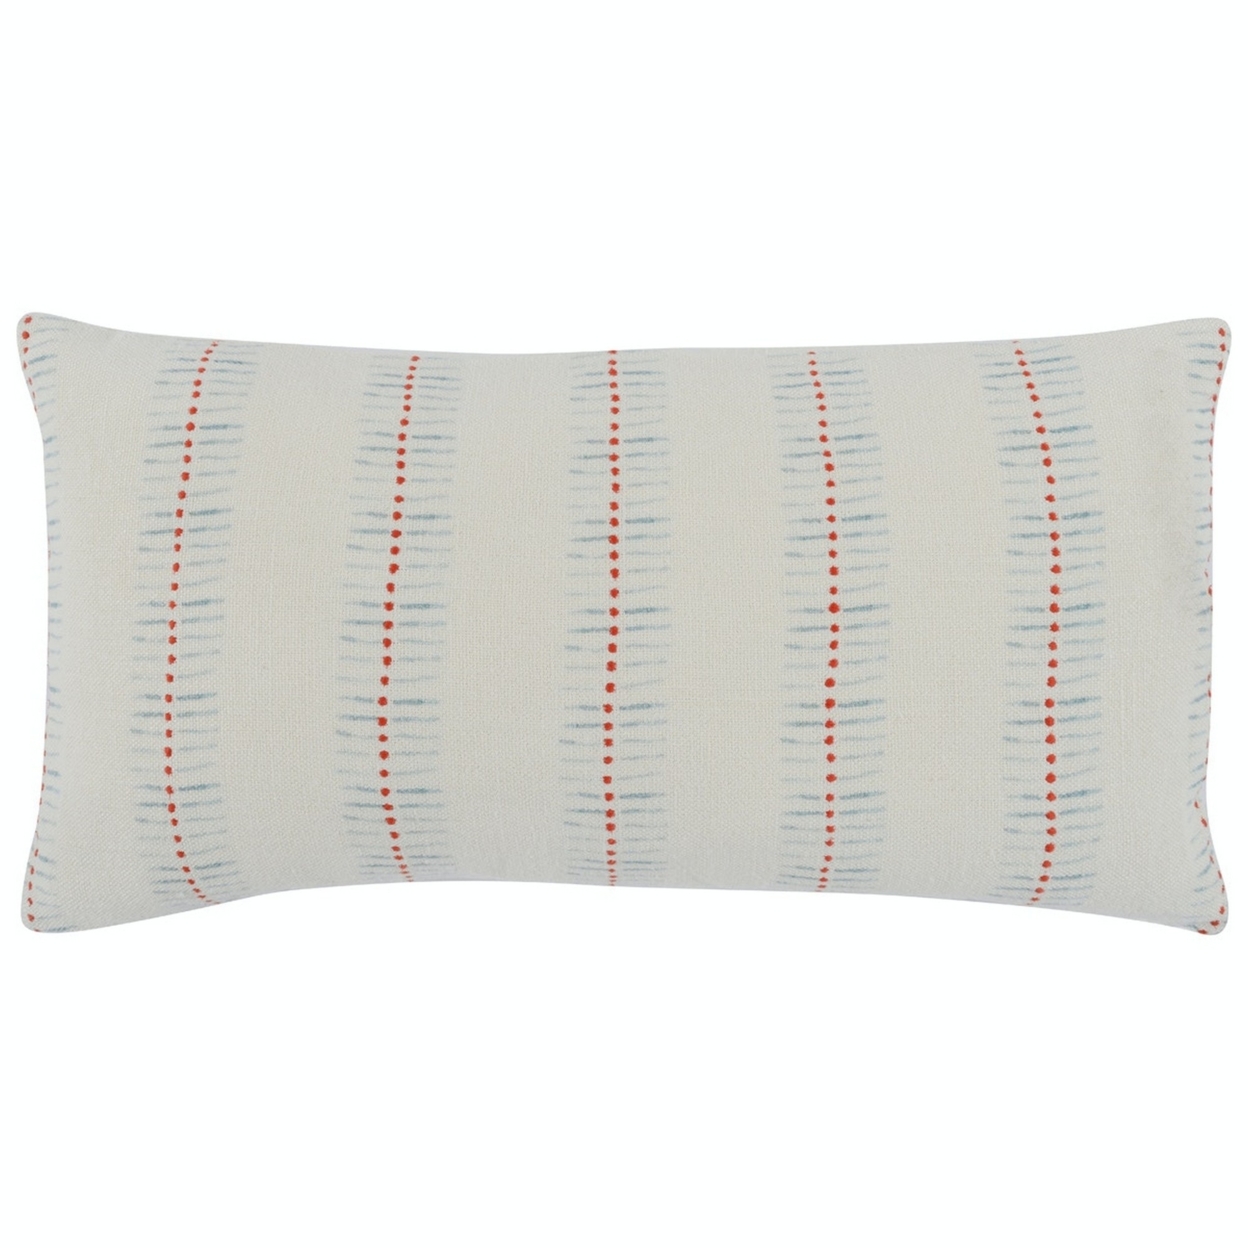 14 X 26 Accent Lumbar Pillow, Down Insert, Embroidered Details, Ivory White- Saltoro Sherpi